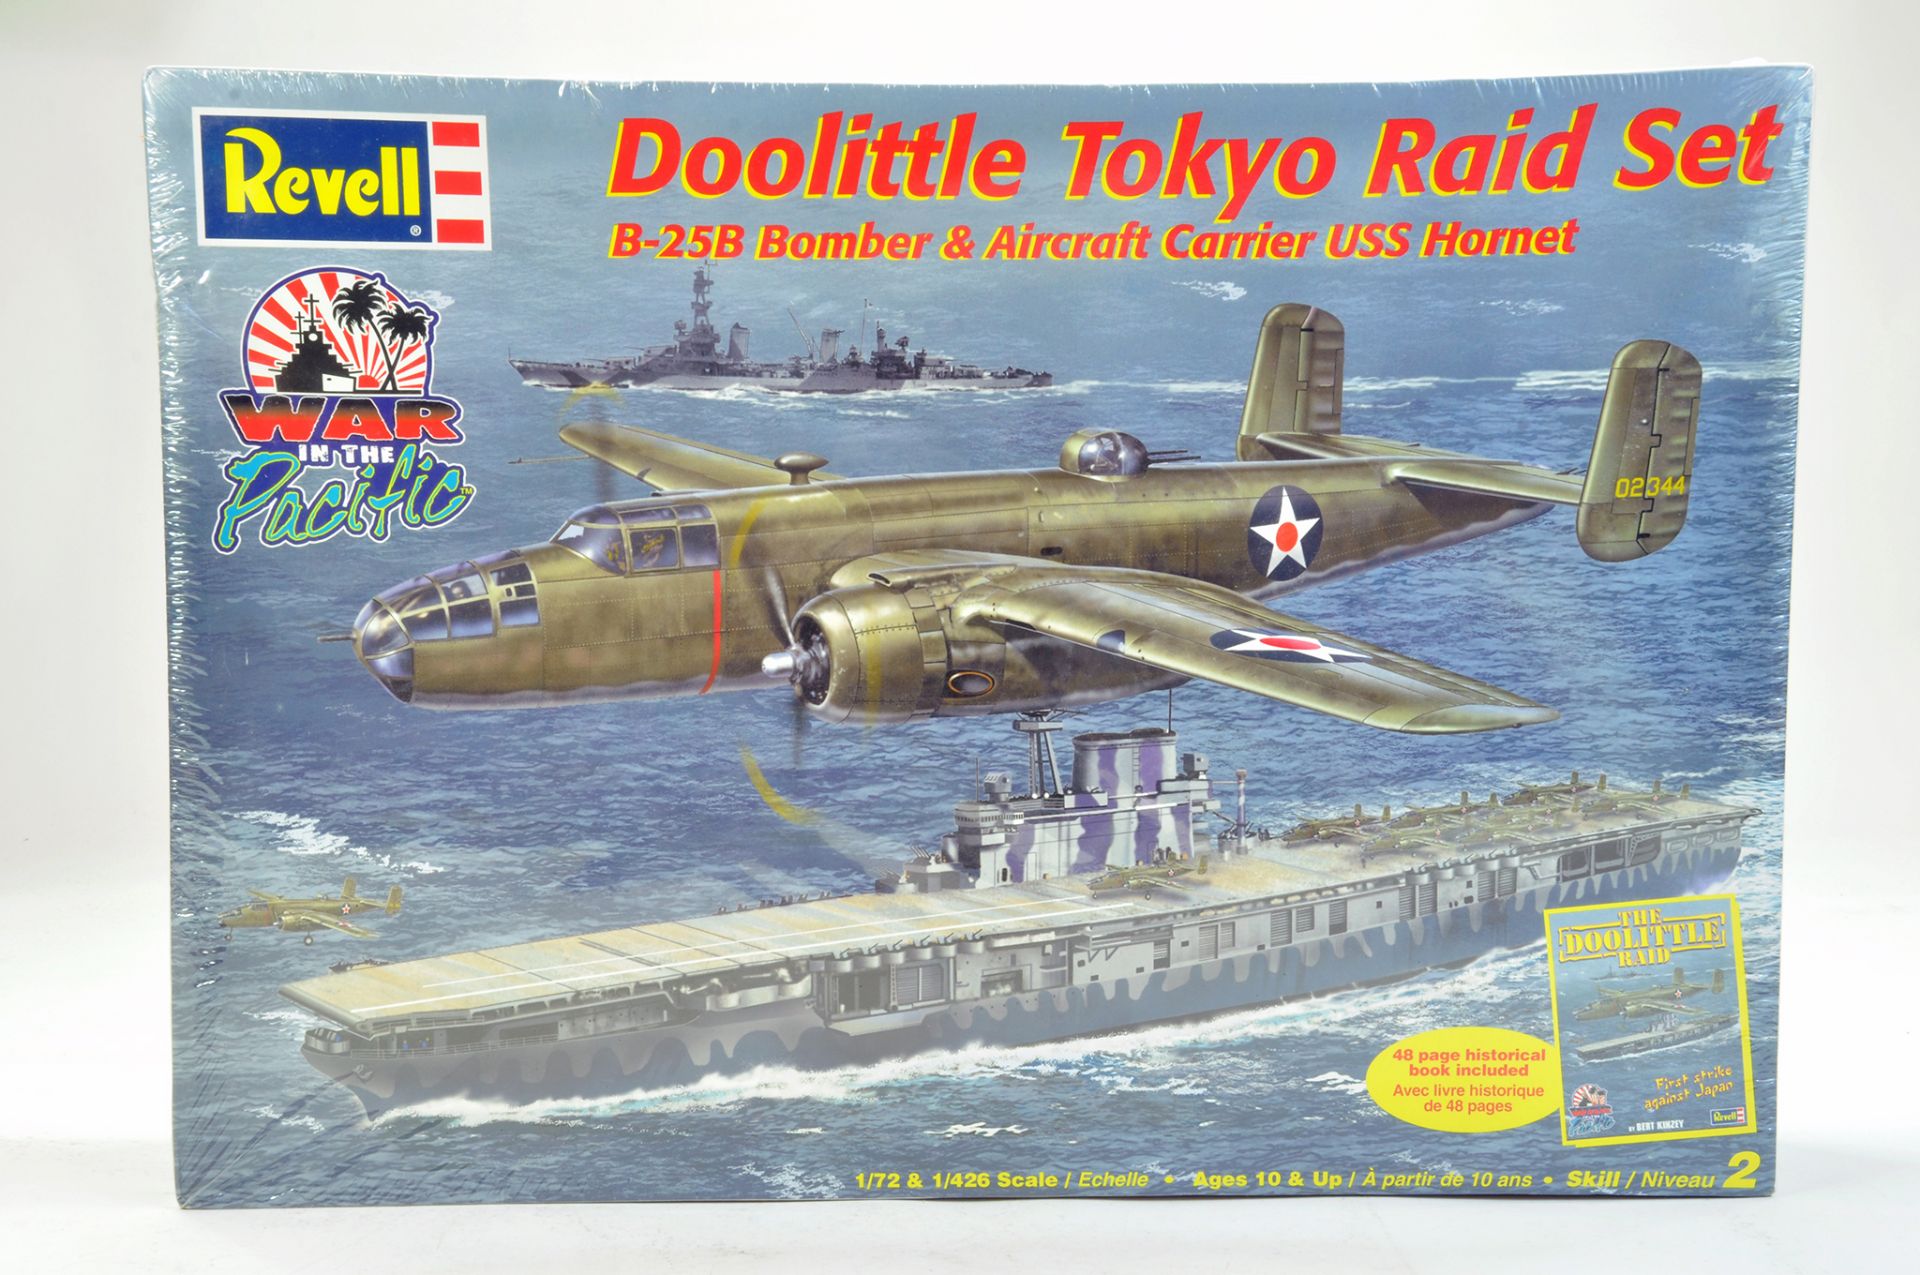 Revell 1/72 / 1/426 Model Kit comprising B-25B Bomber and Carrier Set. Ex Trade Stock, hence